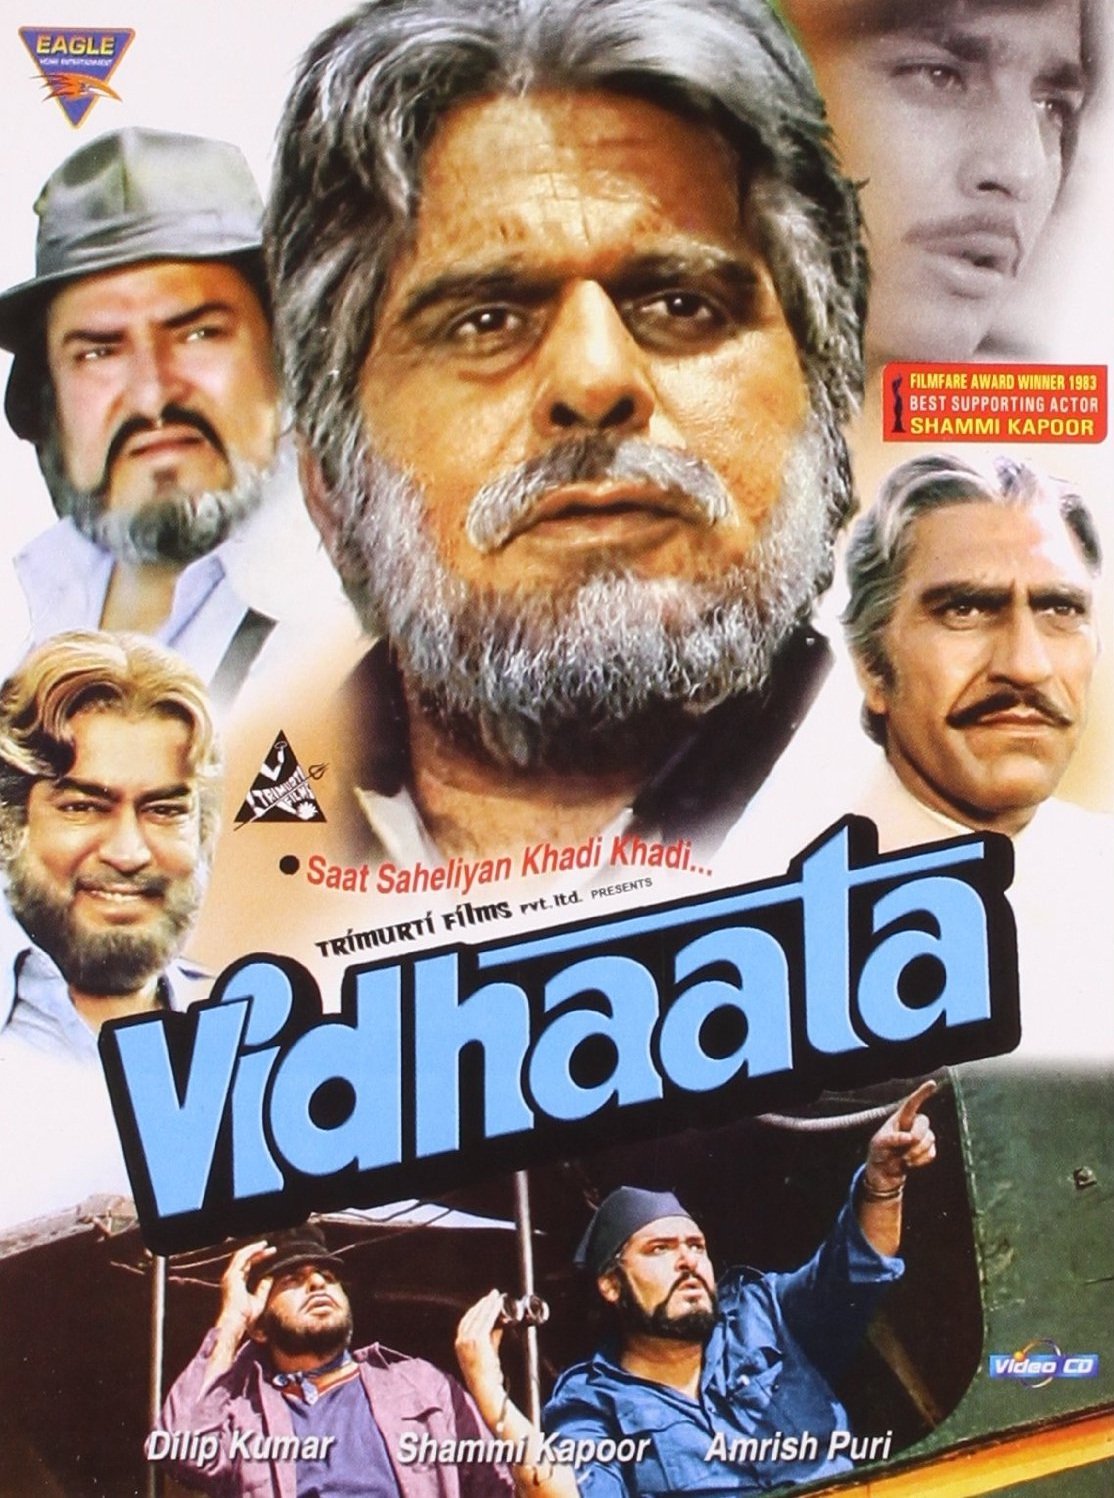 Vidhaata Movie Poster